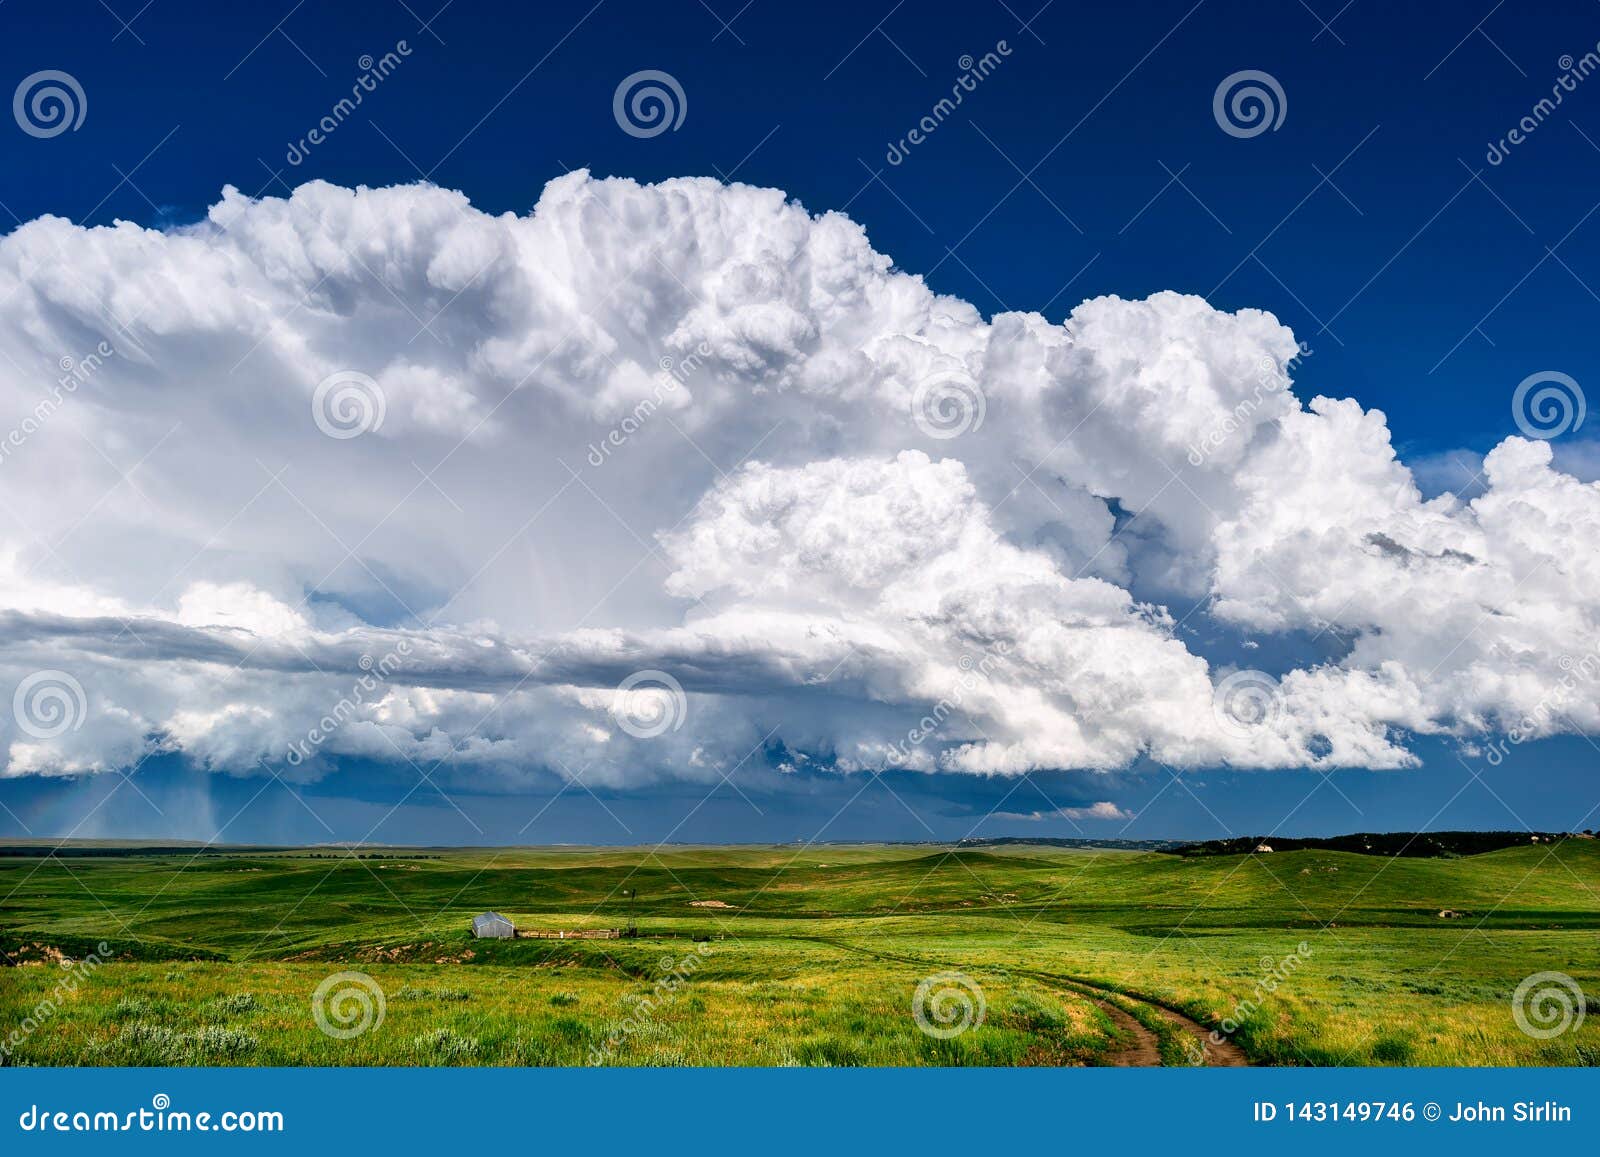 cumulonimbus thunderstorm clouds with wyoming landscape.